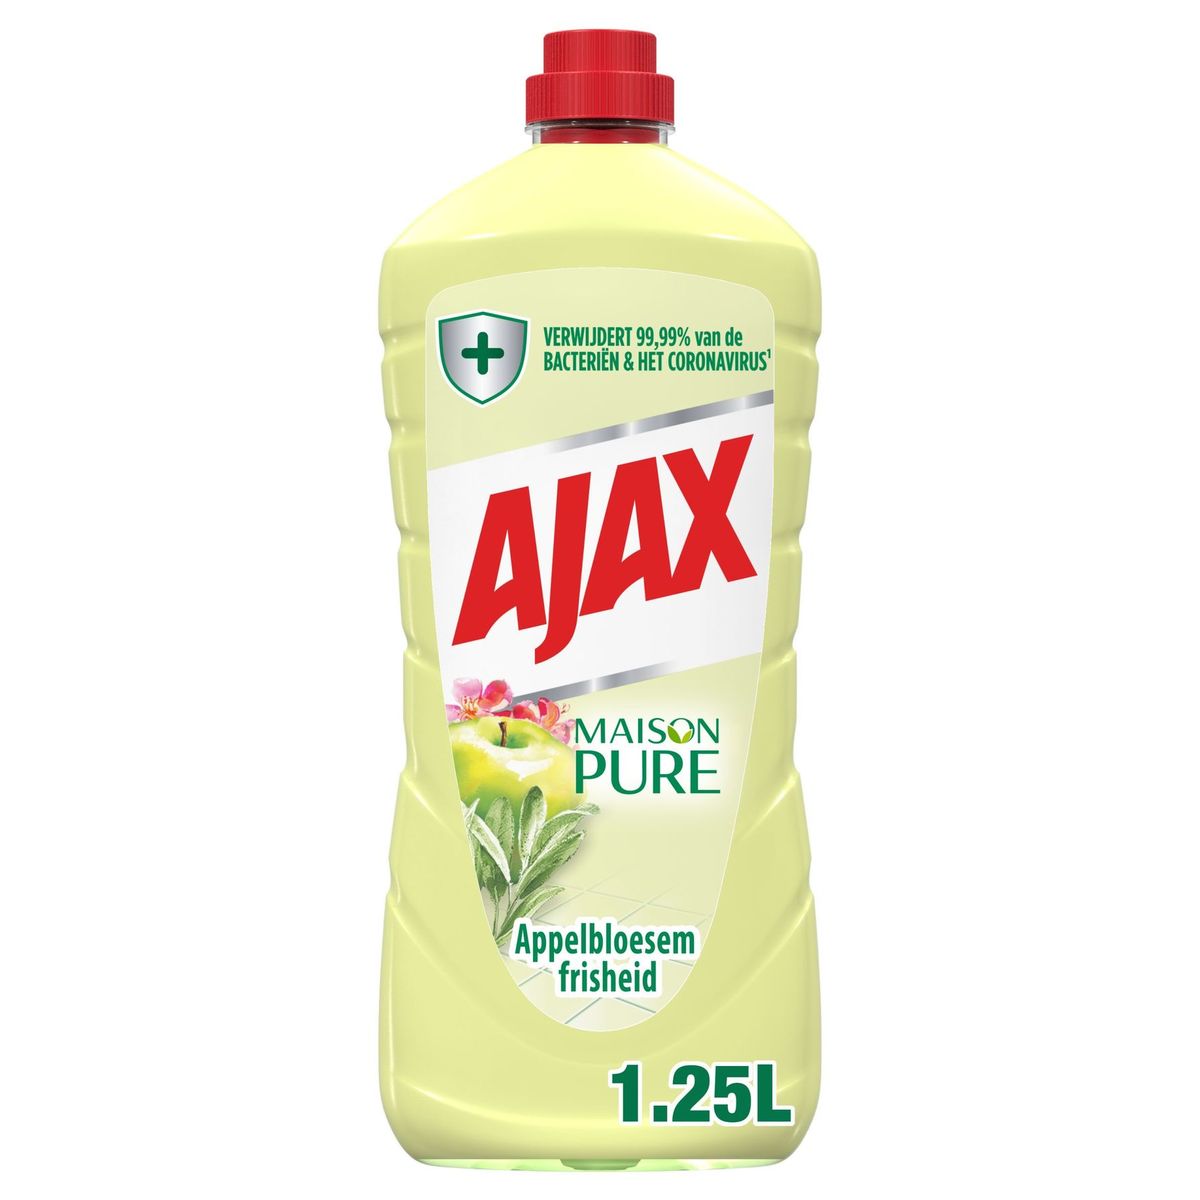 Desinfecterend schoonmaakmiddel Ajax Pure Home Appelbloesem 1.25L